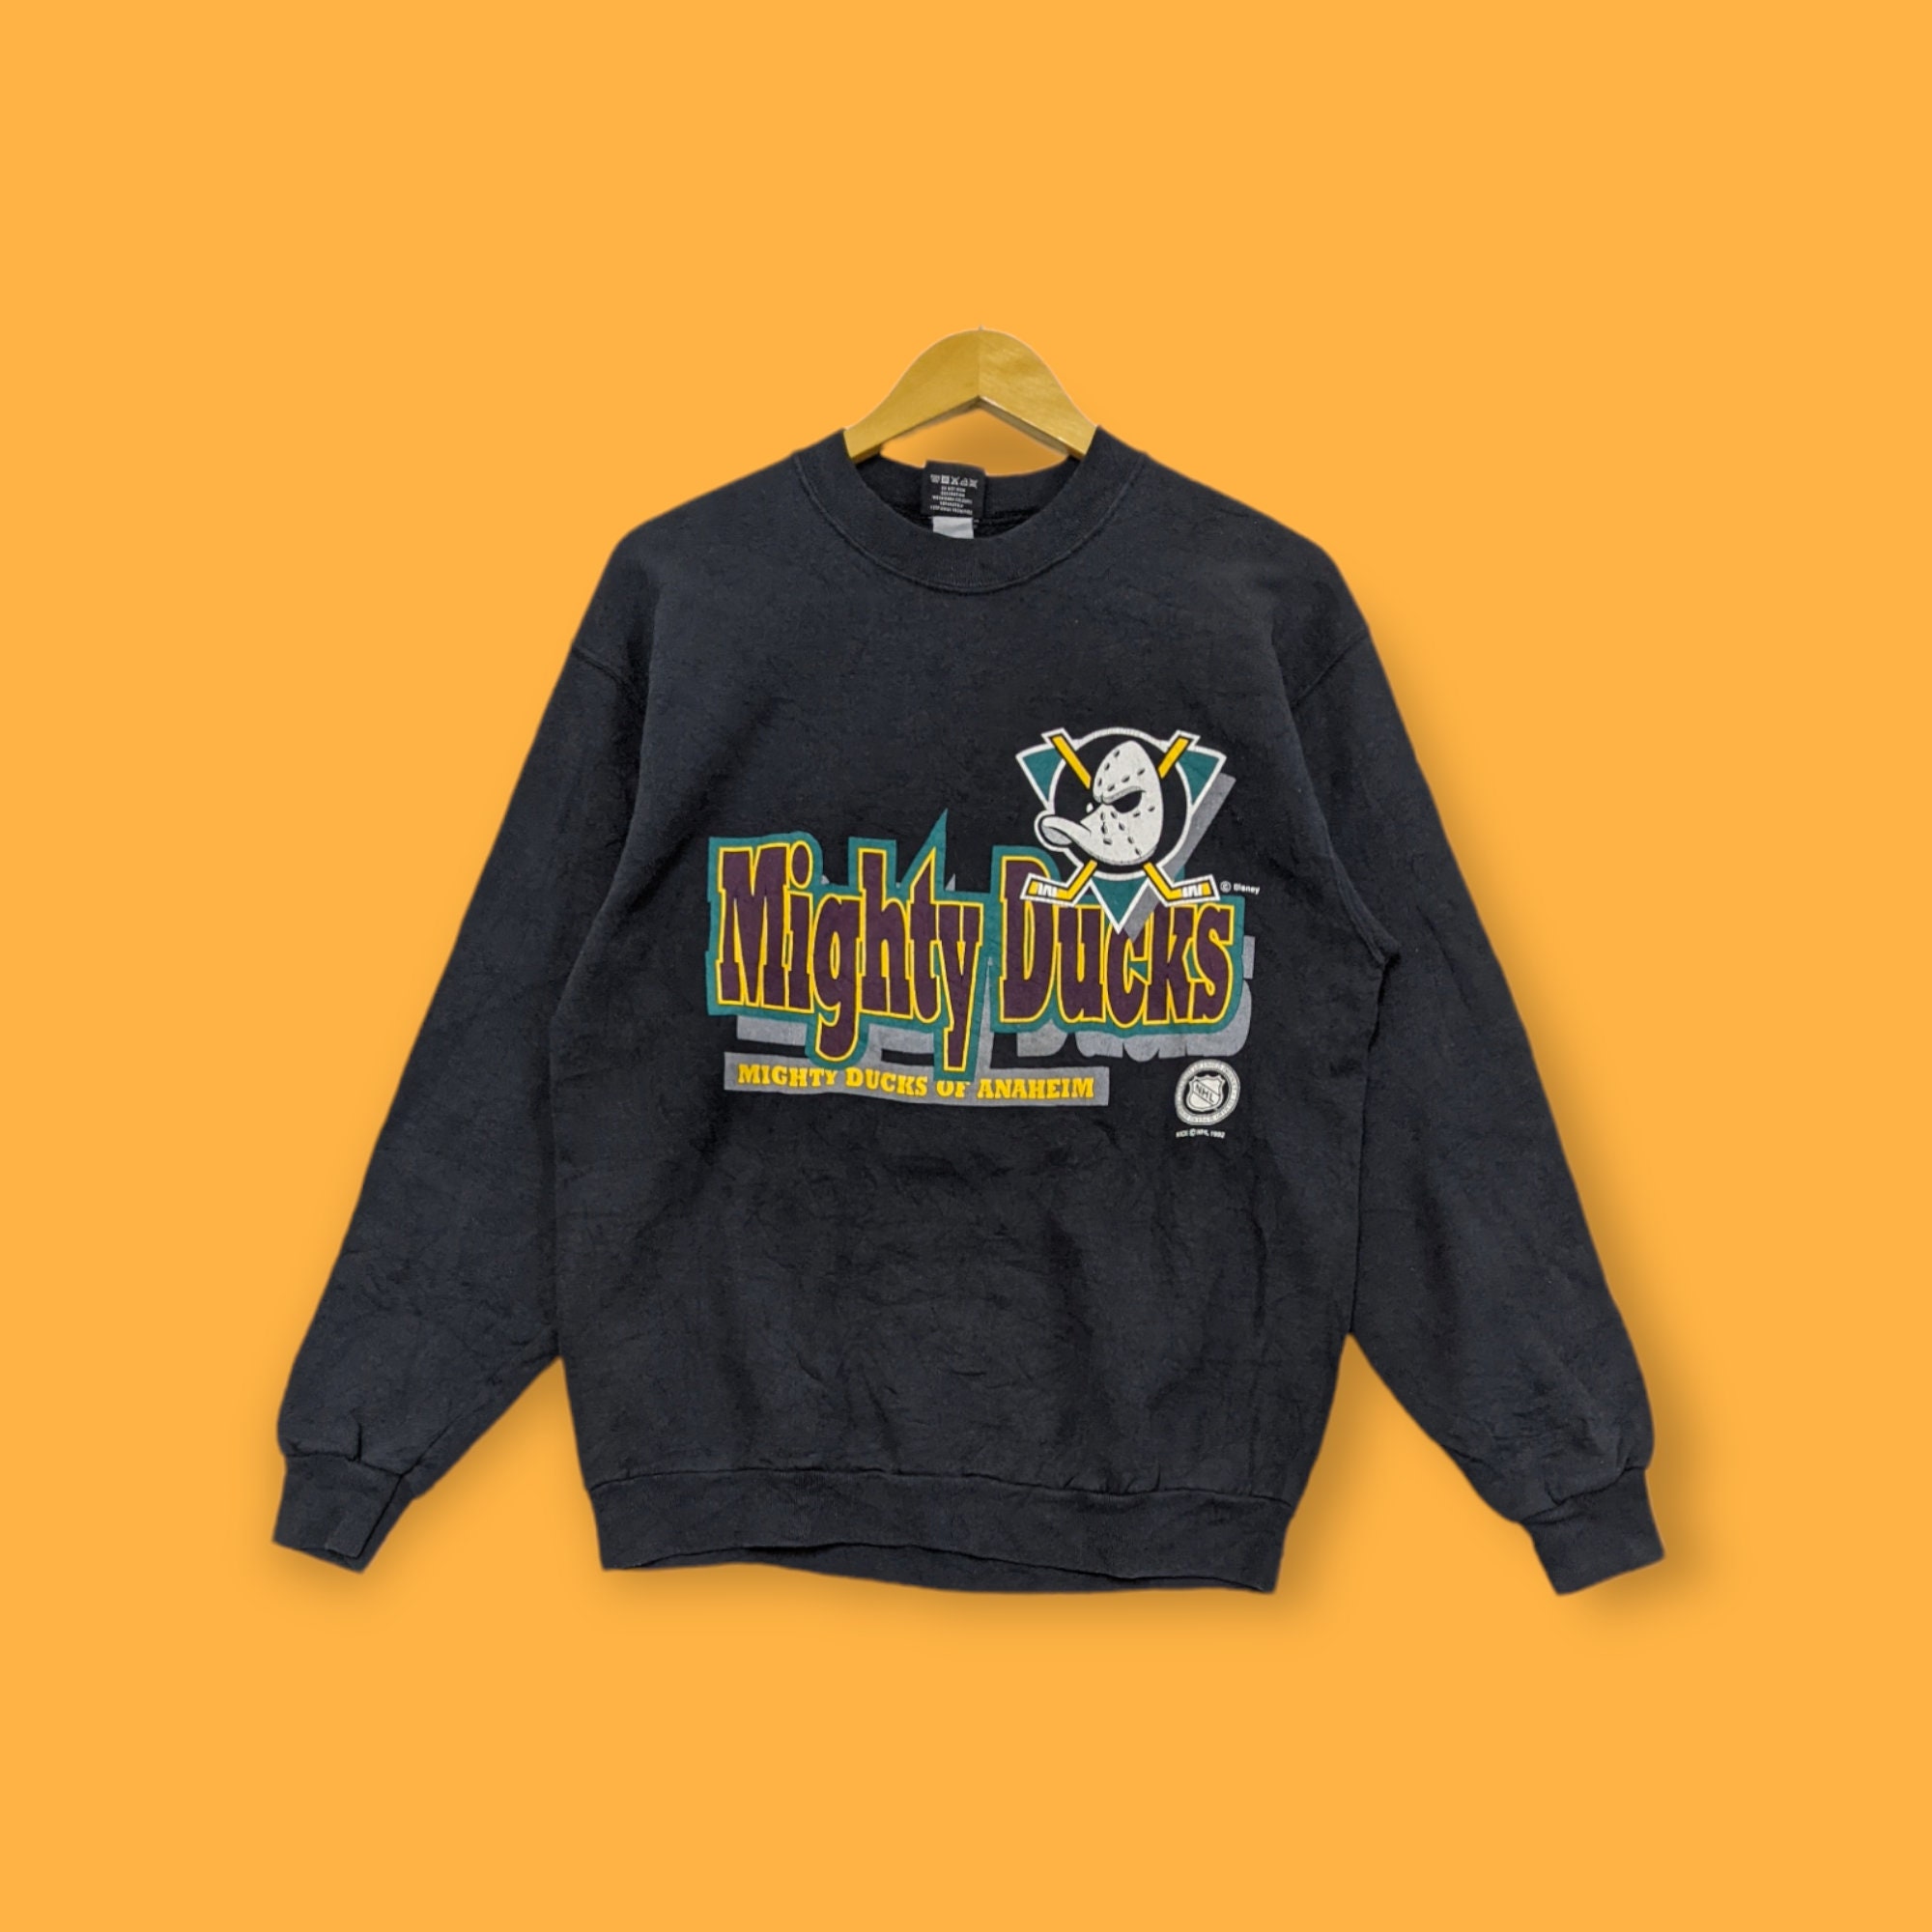 Vintage Mighty Ducks sweater